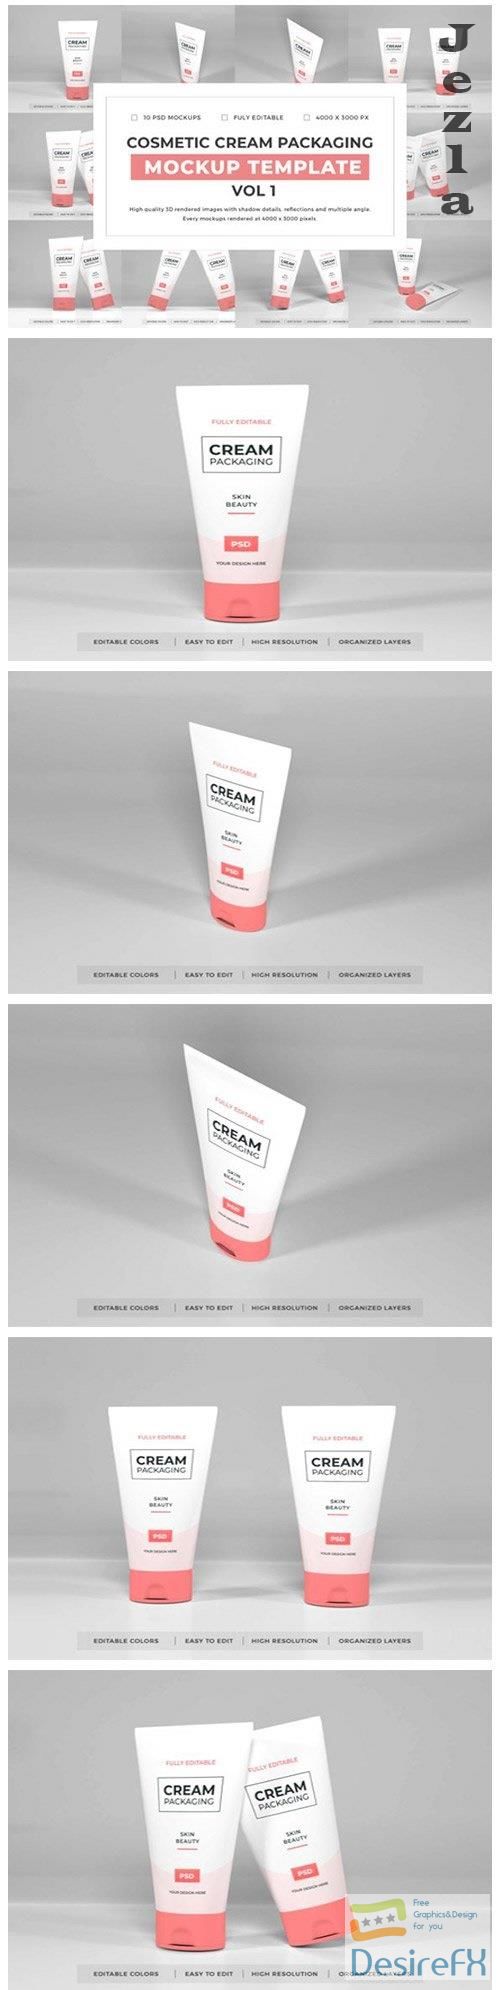 Cosmetic Cream Packaging Mockup Template Bundle Vol 1 - 1052568